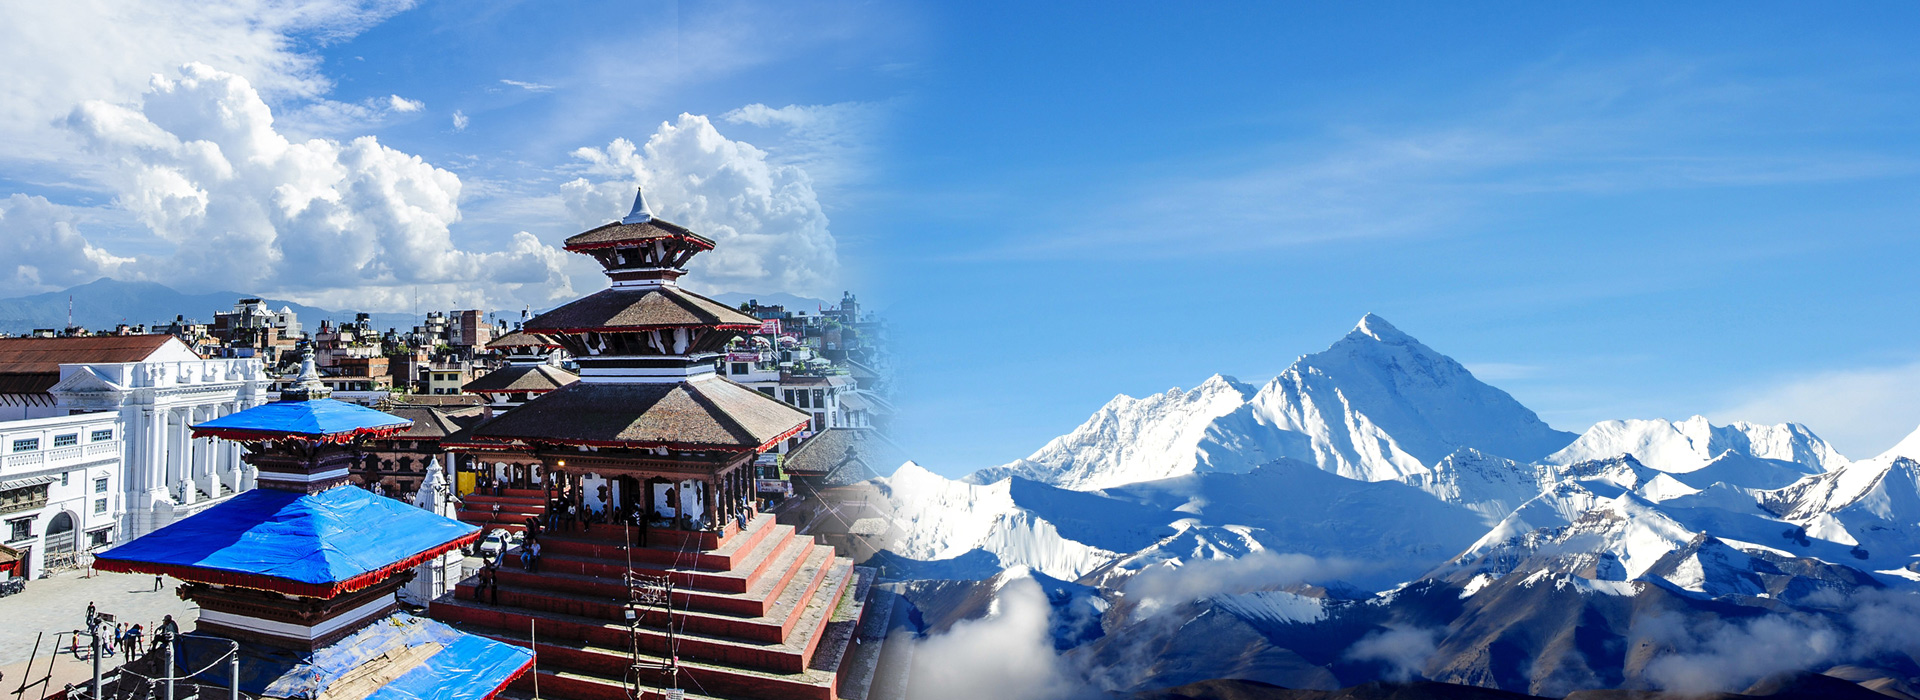 Tibet Tour From Nepal